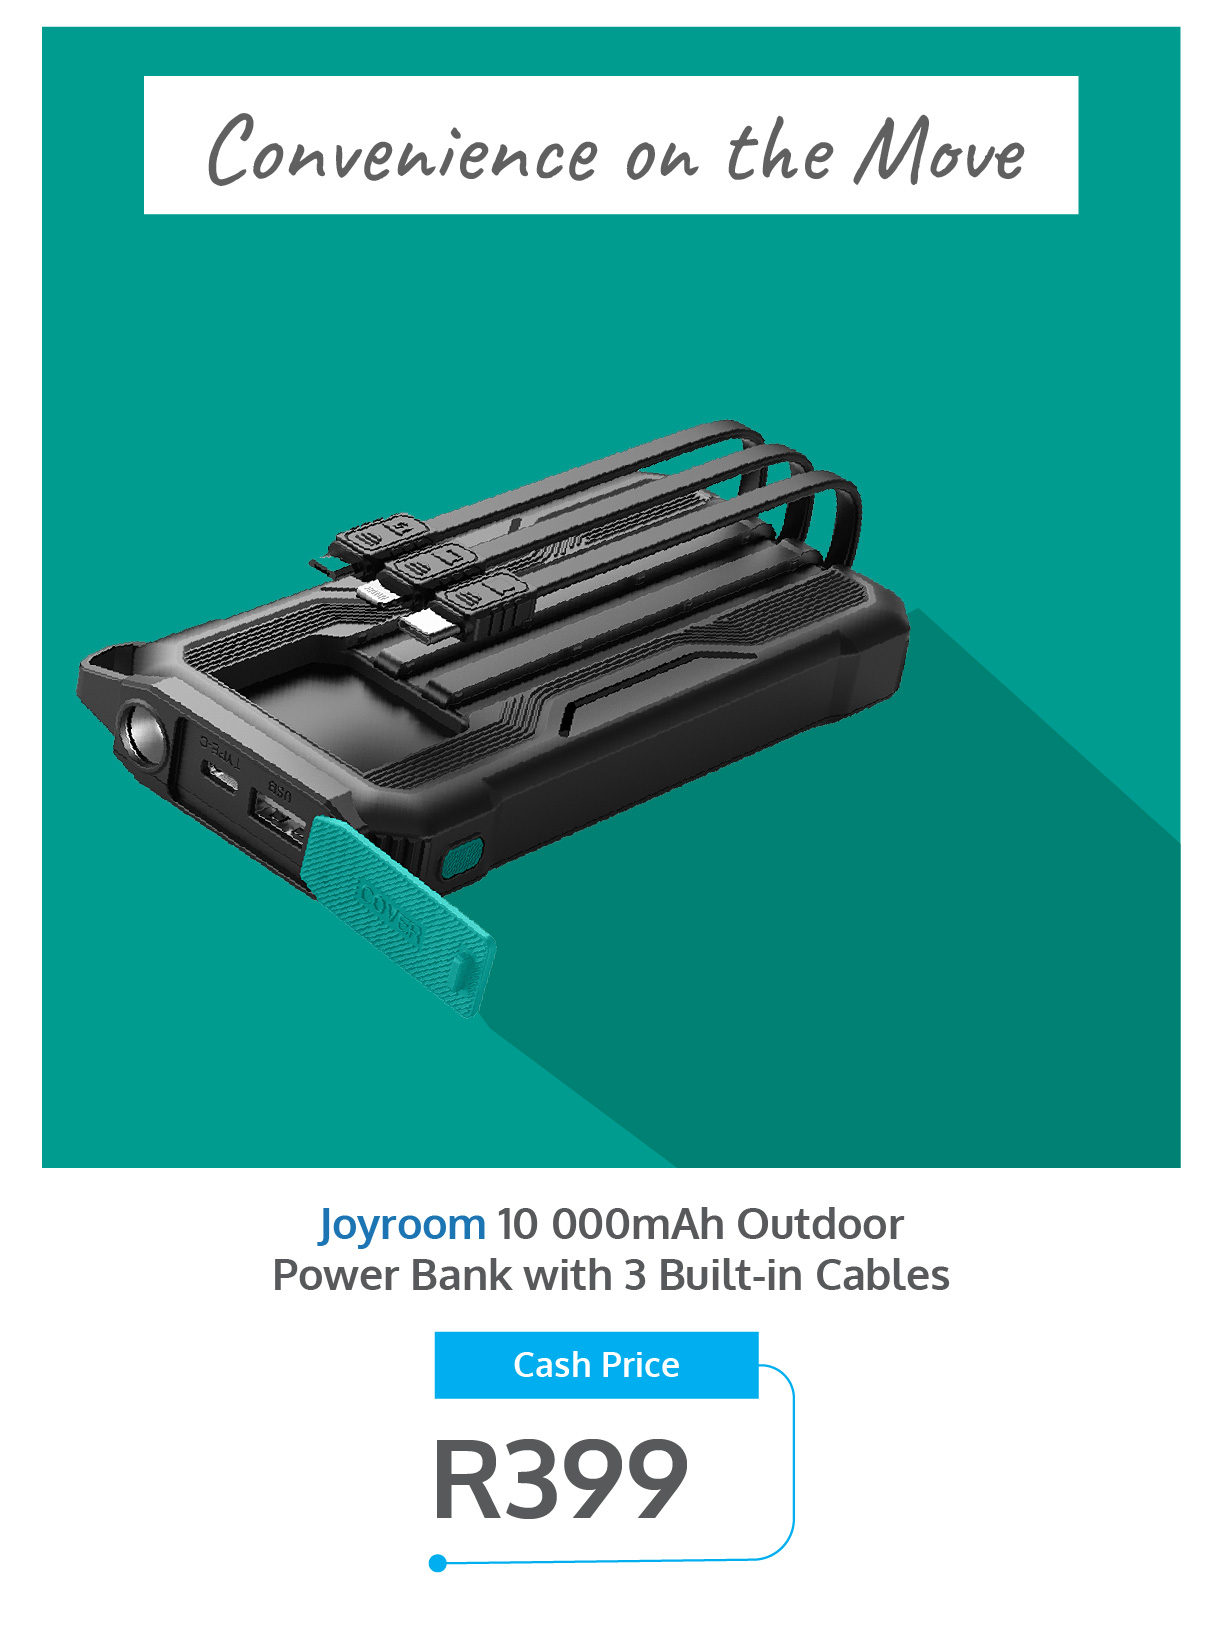 Joyroom 10000mAh Powerbank with three cables - Prepaid hero deal - April